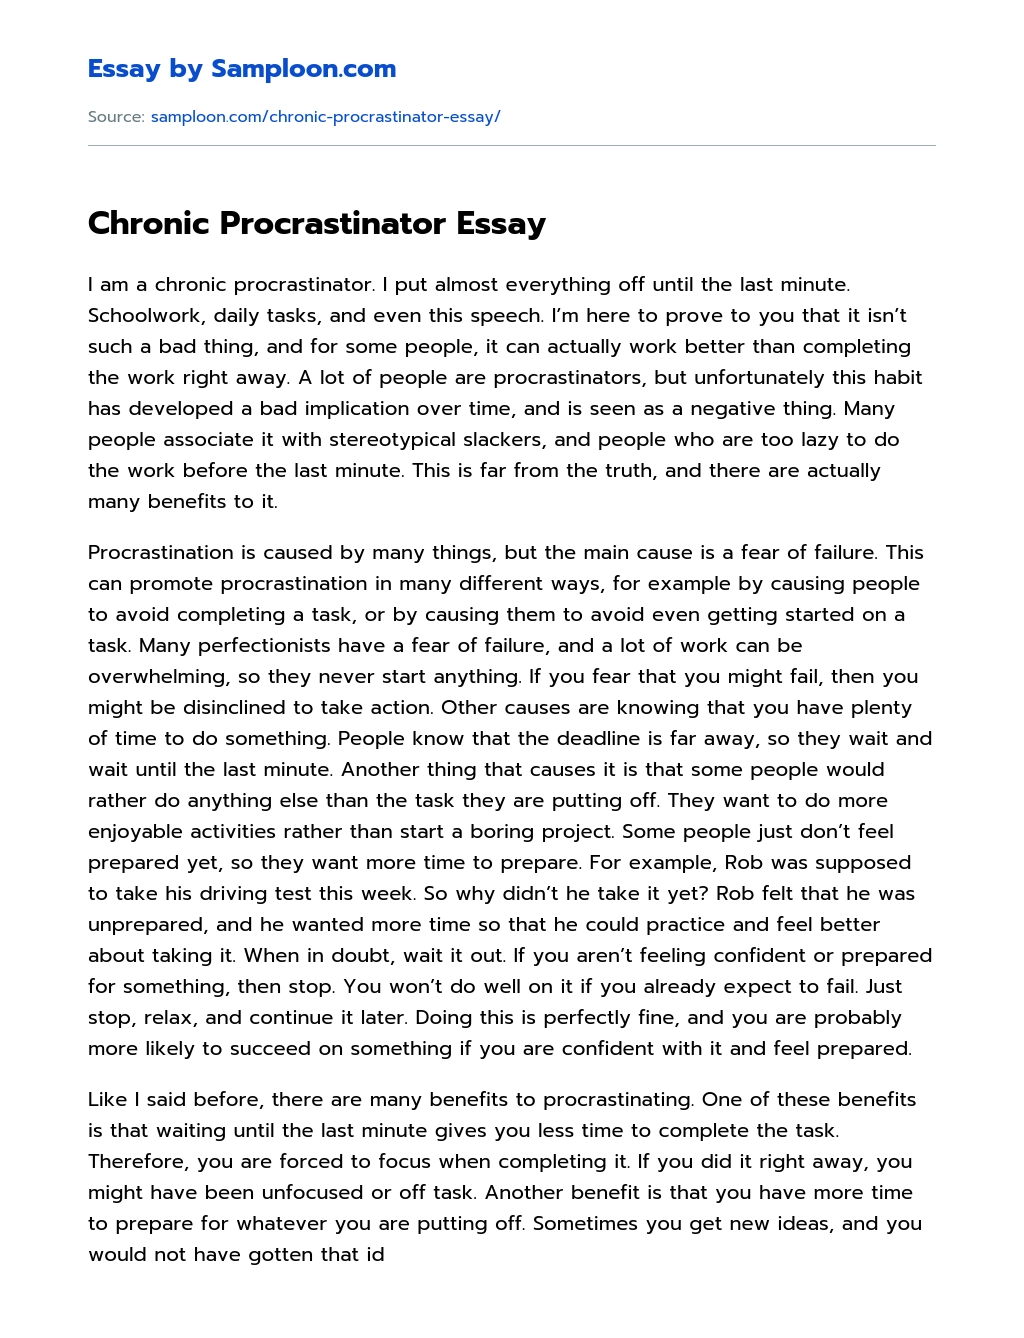 Chronic Procrastinator Essay essay